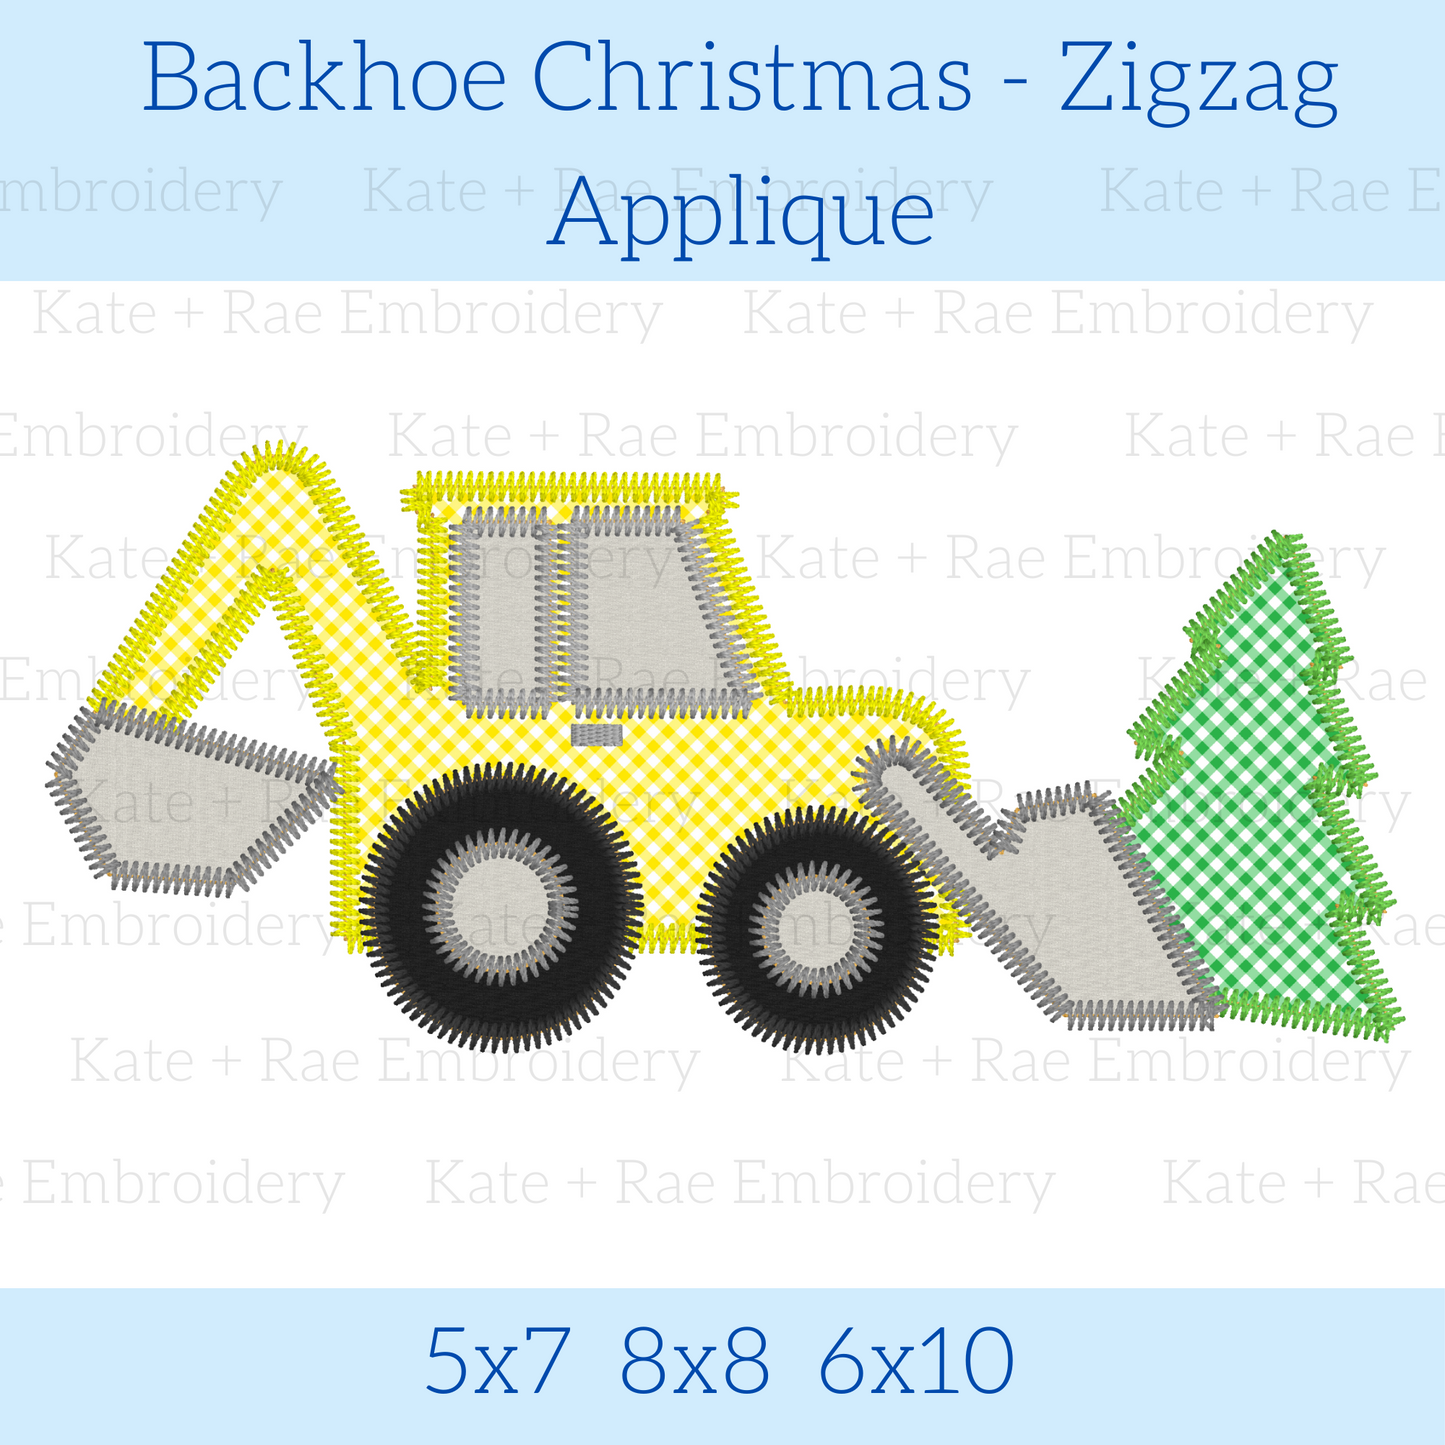 Backhoe Christmas Zigzag Applique Embroidery Design